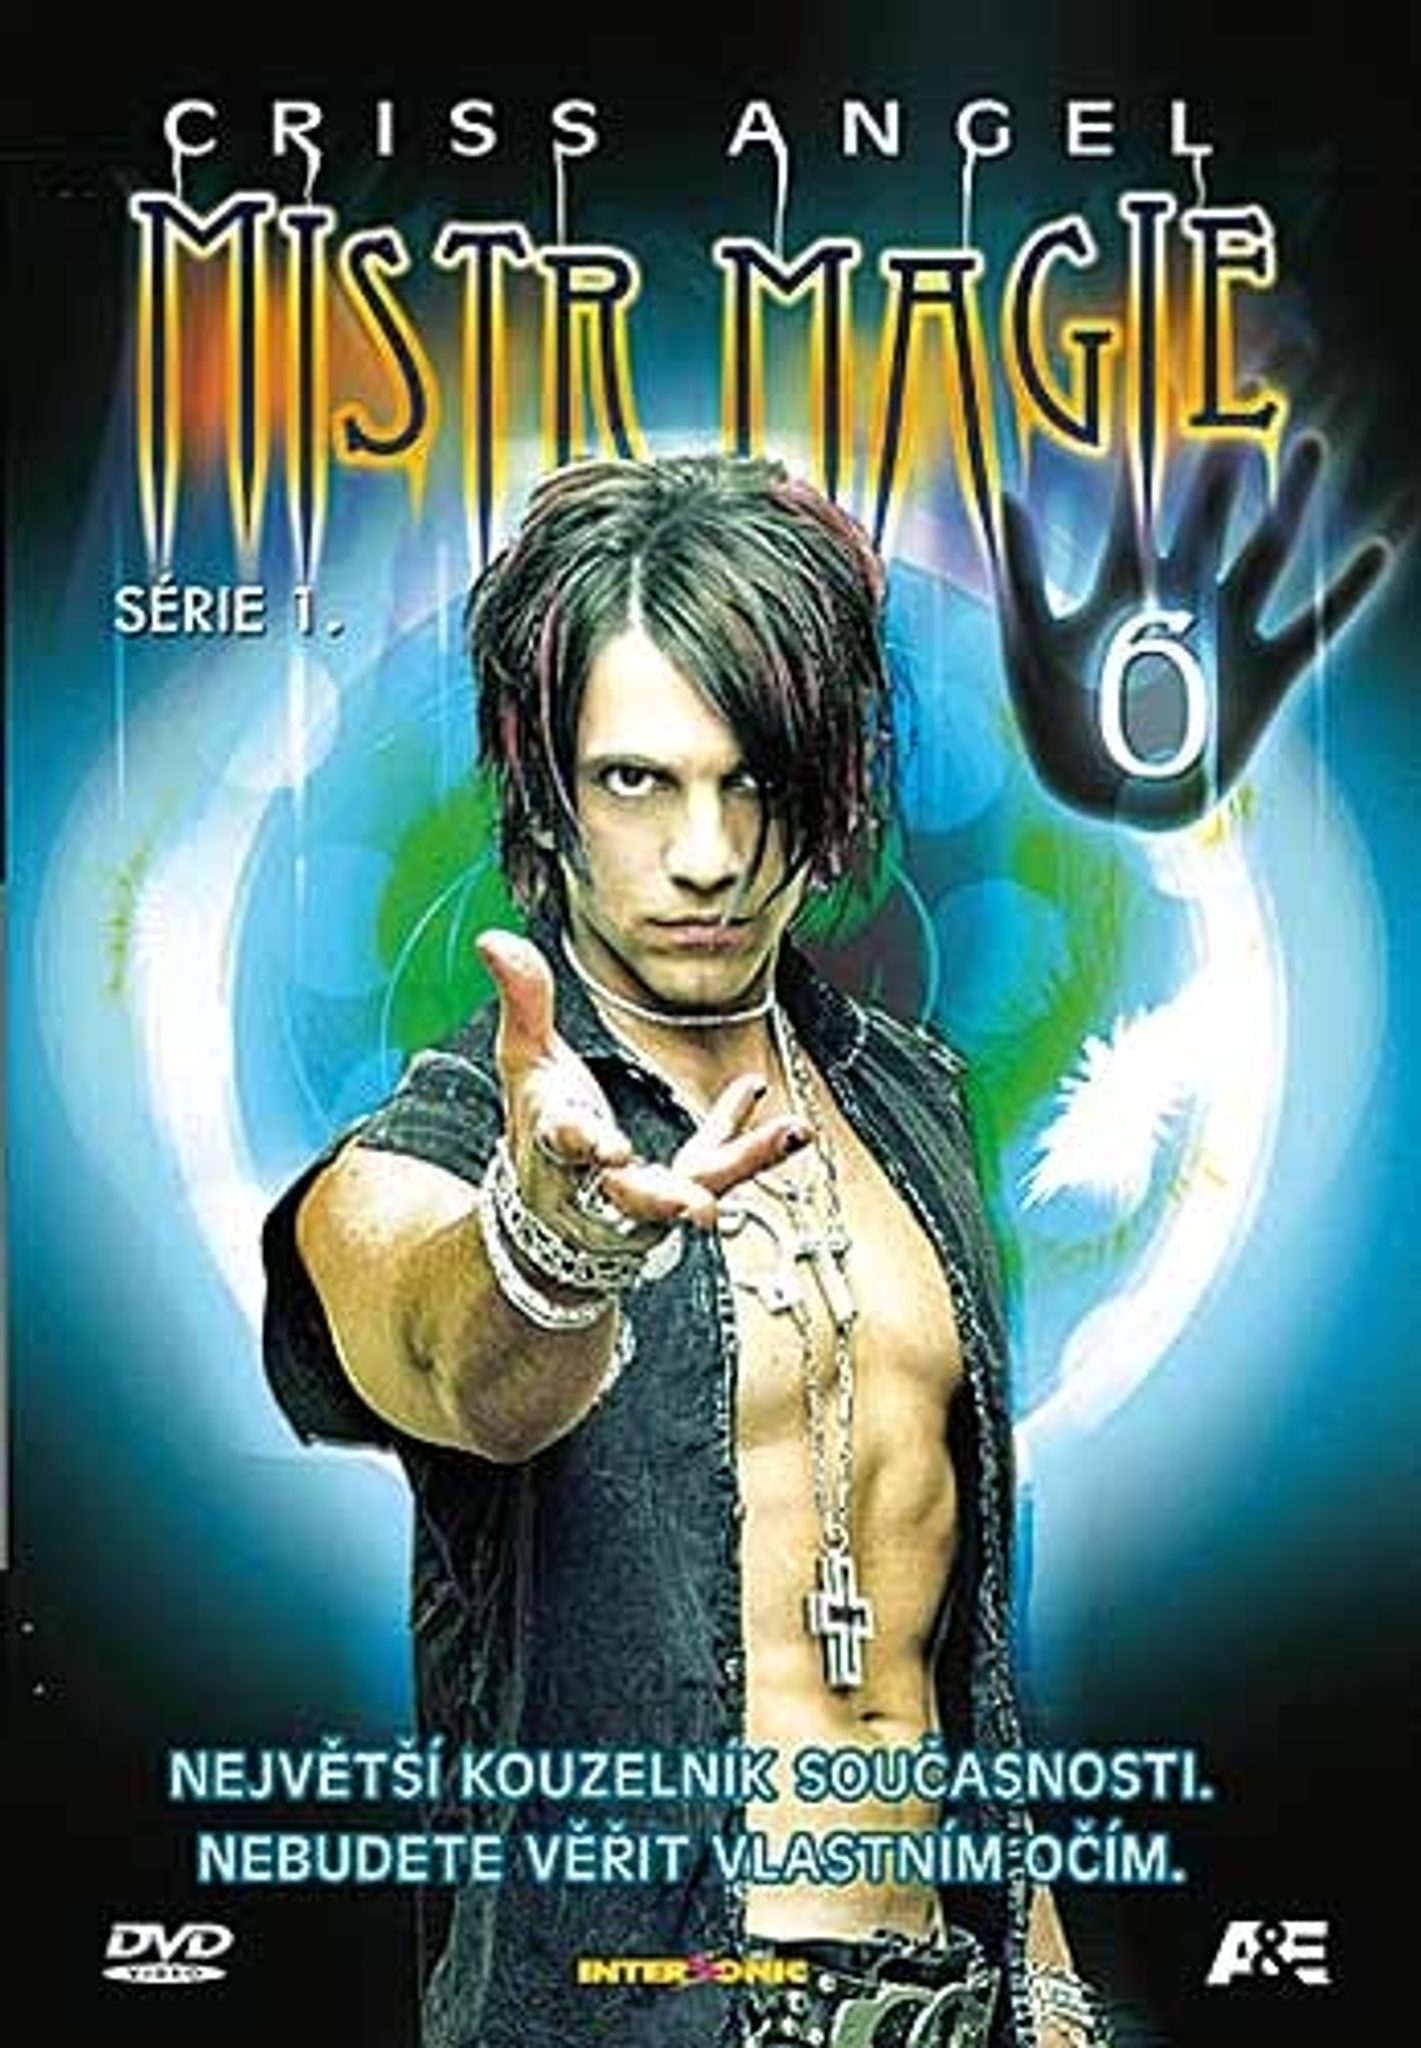 DVD Criss Angel Mistr magie srie 1 6 - Kliknutm na obrzek zavete